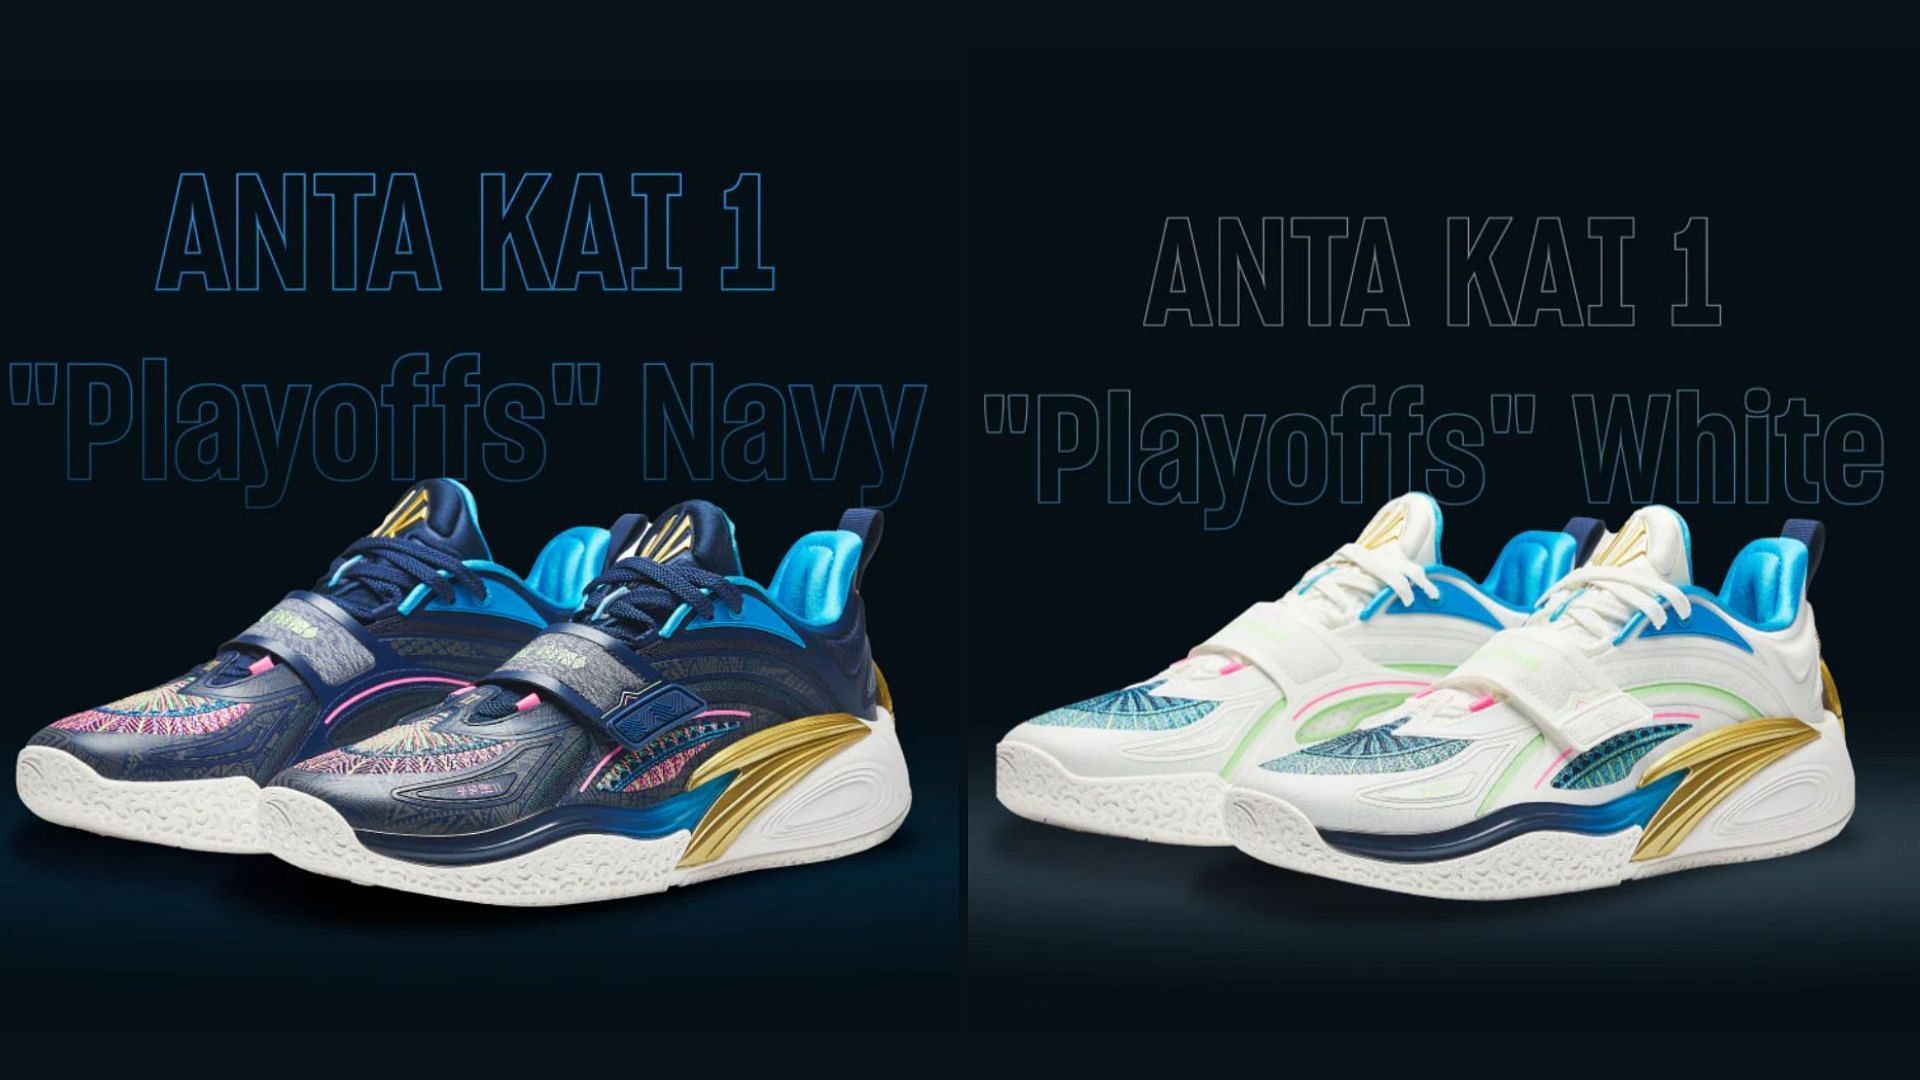 Kyrie Irving ANTA KAI 1: Kyrie Irving x ANTA KAI 1 Playoff sneaker ...